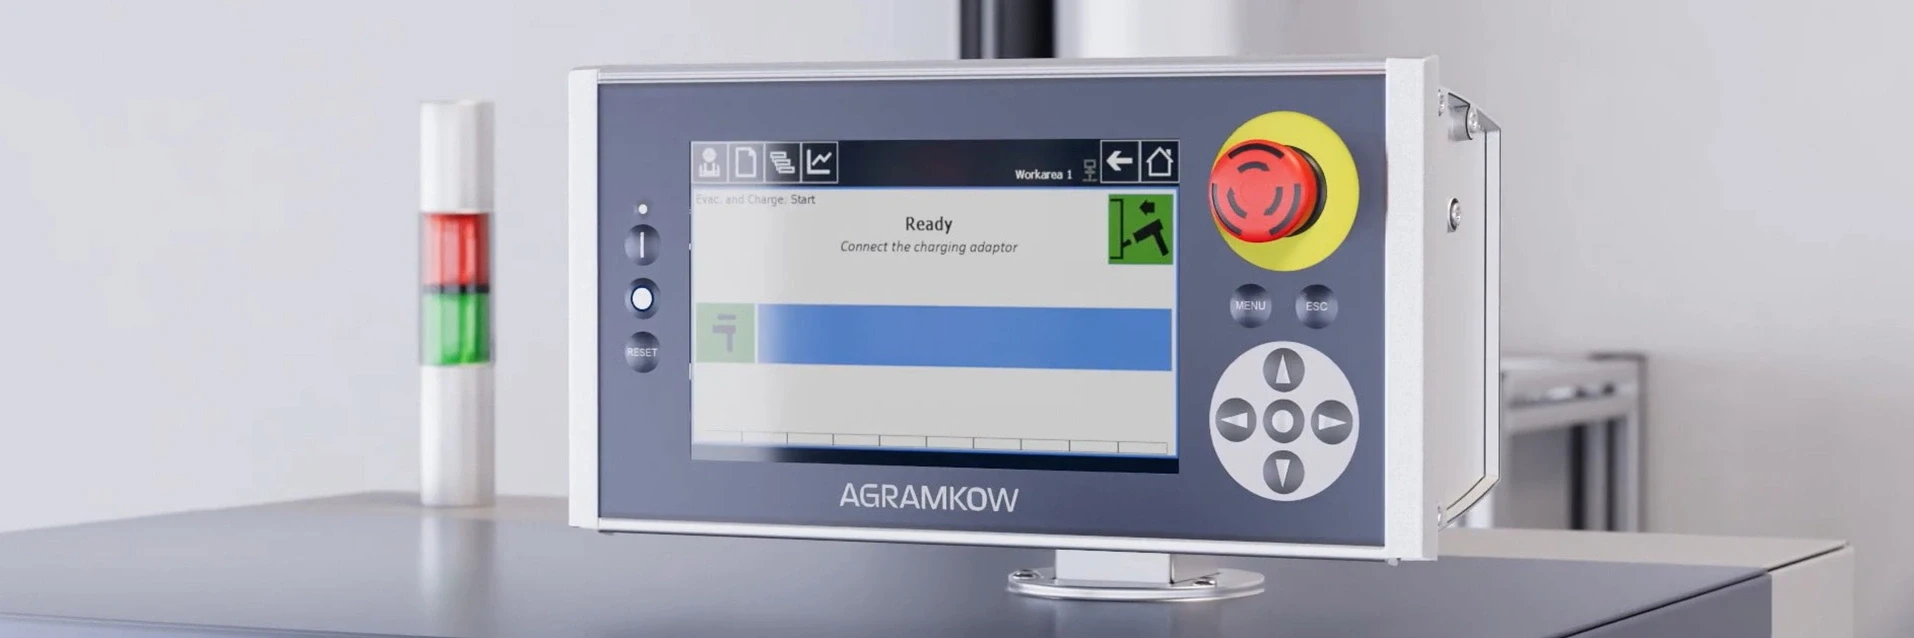 Agramkow refrigerant charging machine display